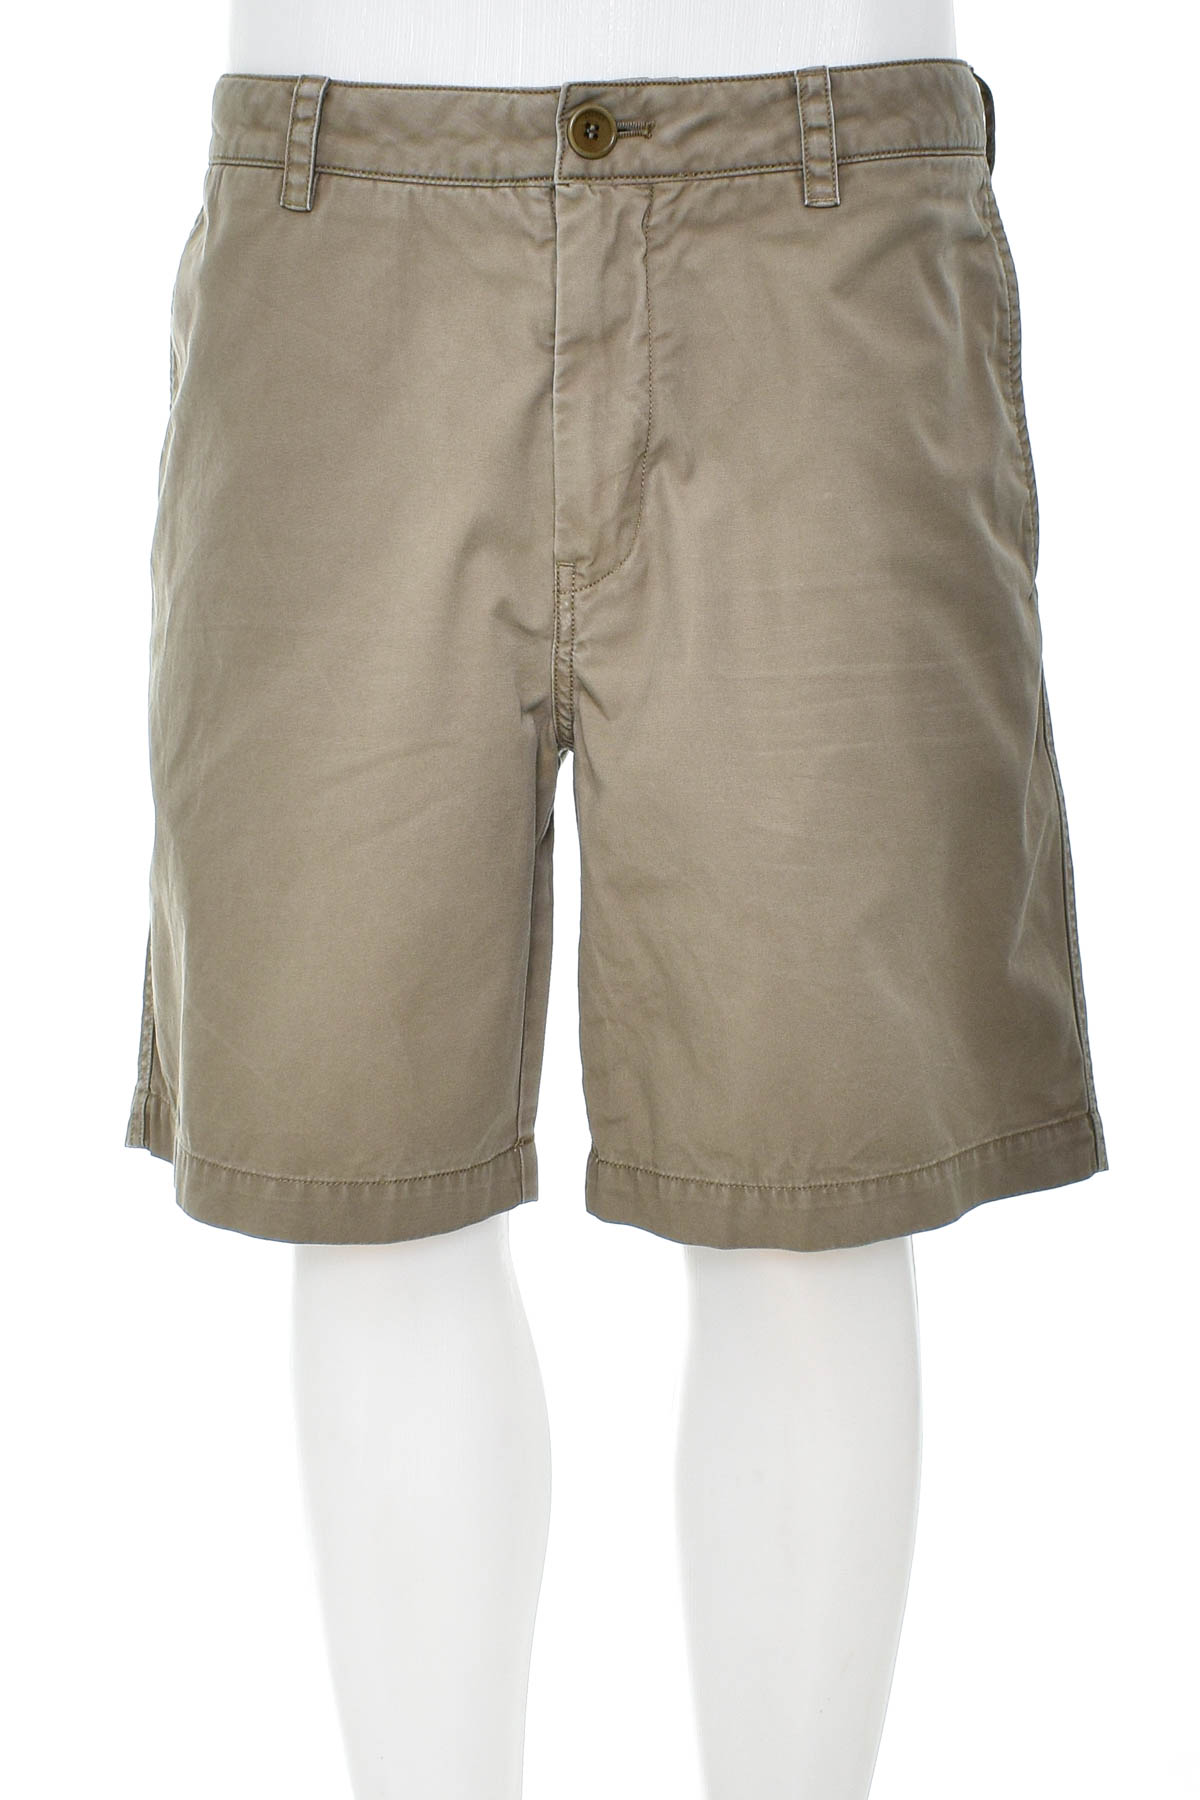 Men's shorts - ARKET - 0